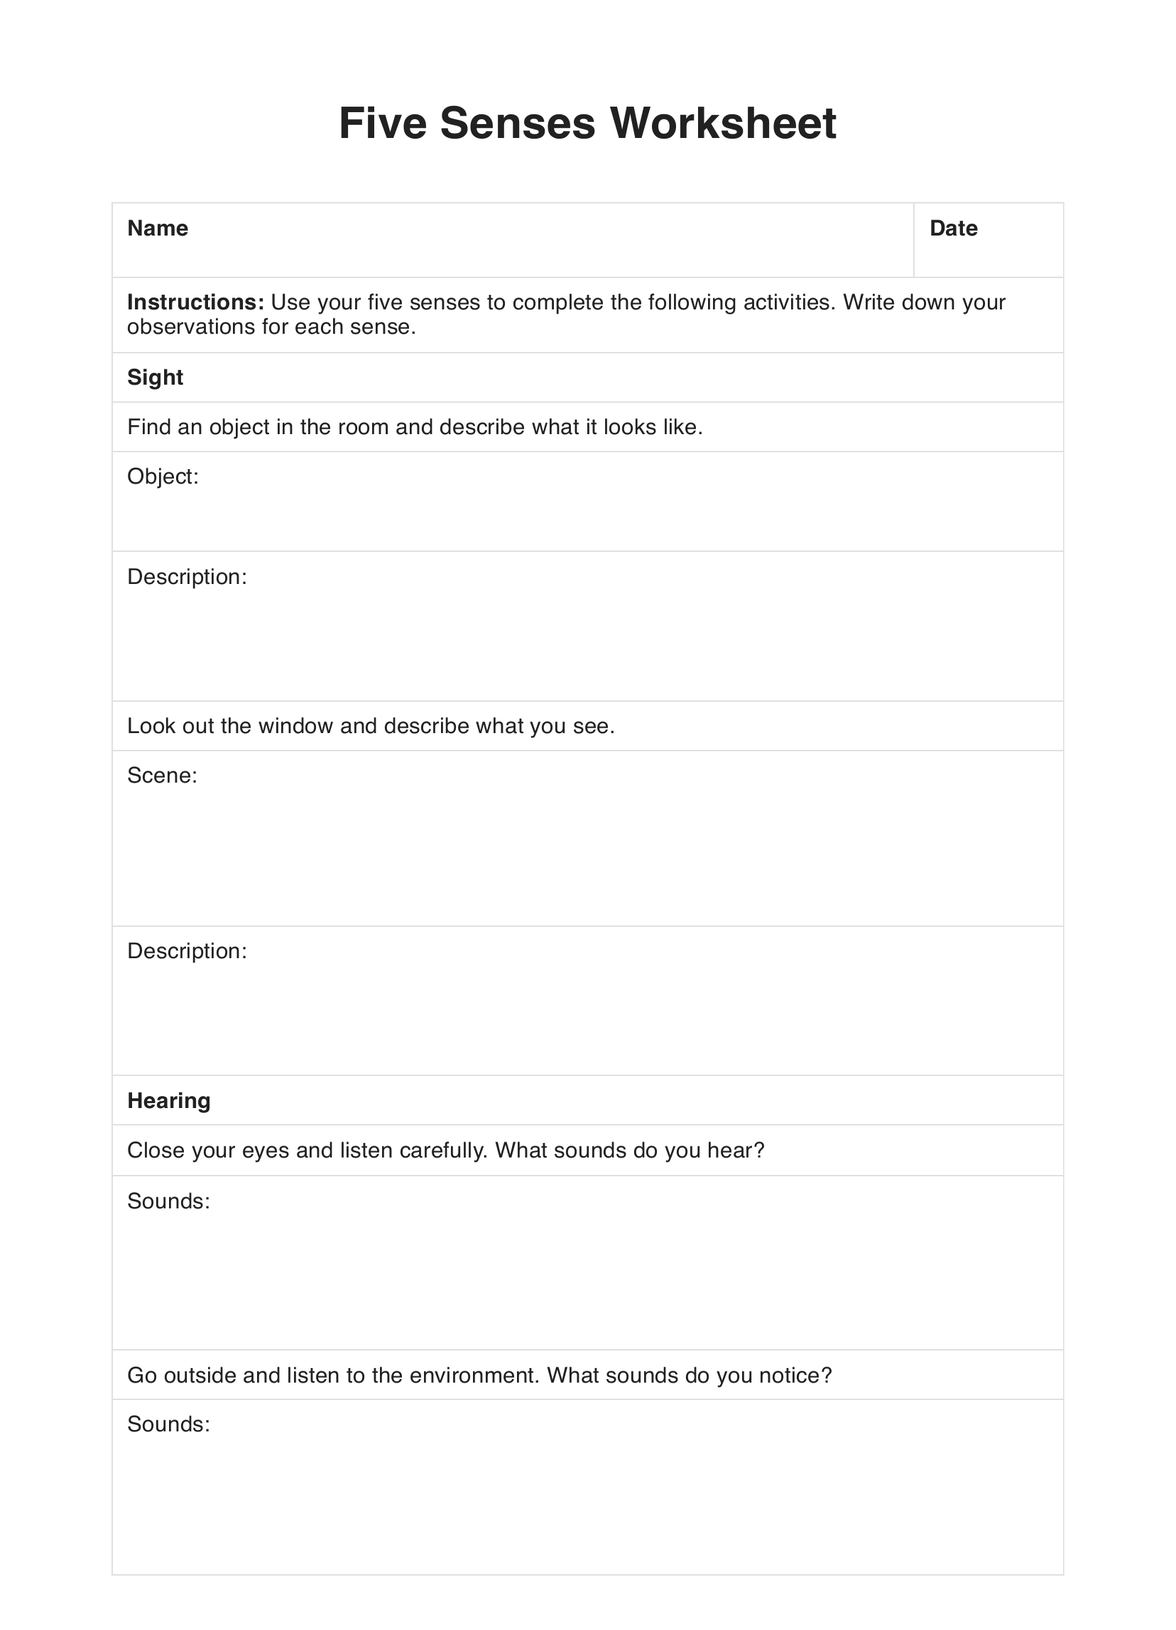 Five Senses Worksheet PDF Example